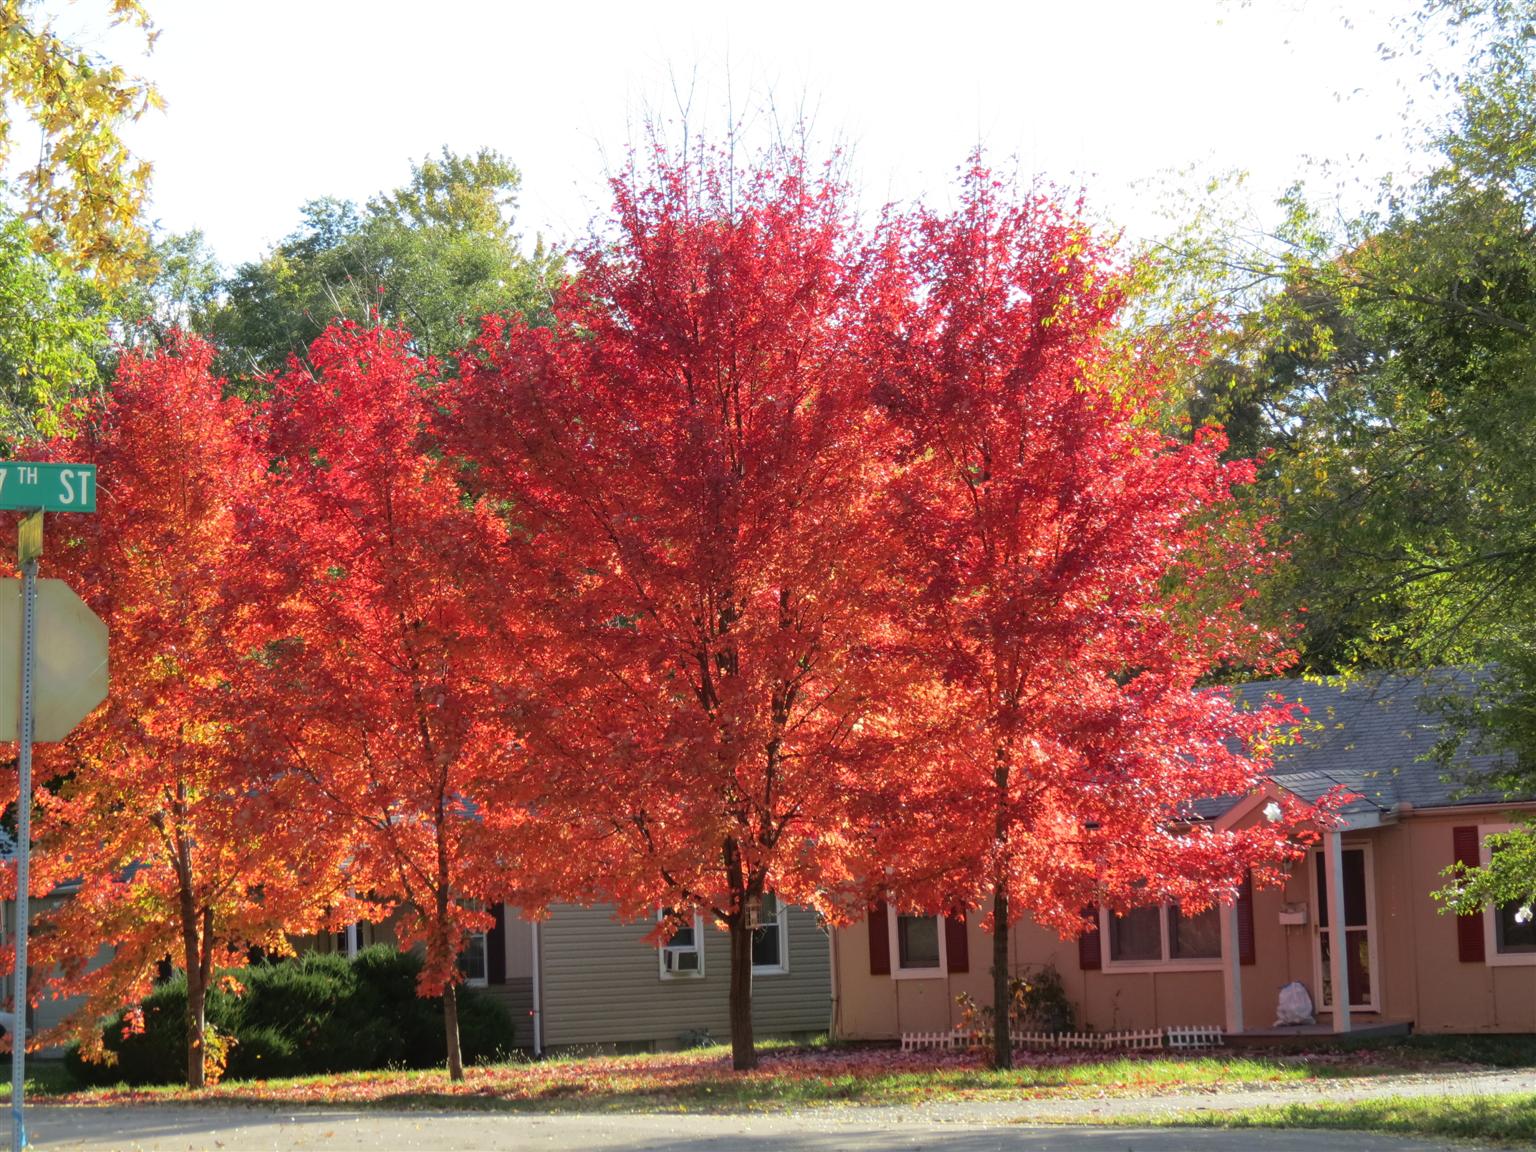 Scenes of fall 2013 in Kansas City, Missouri